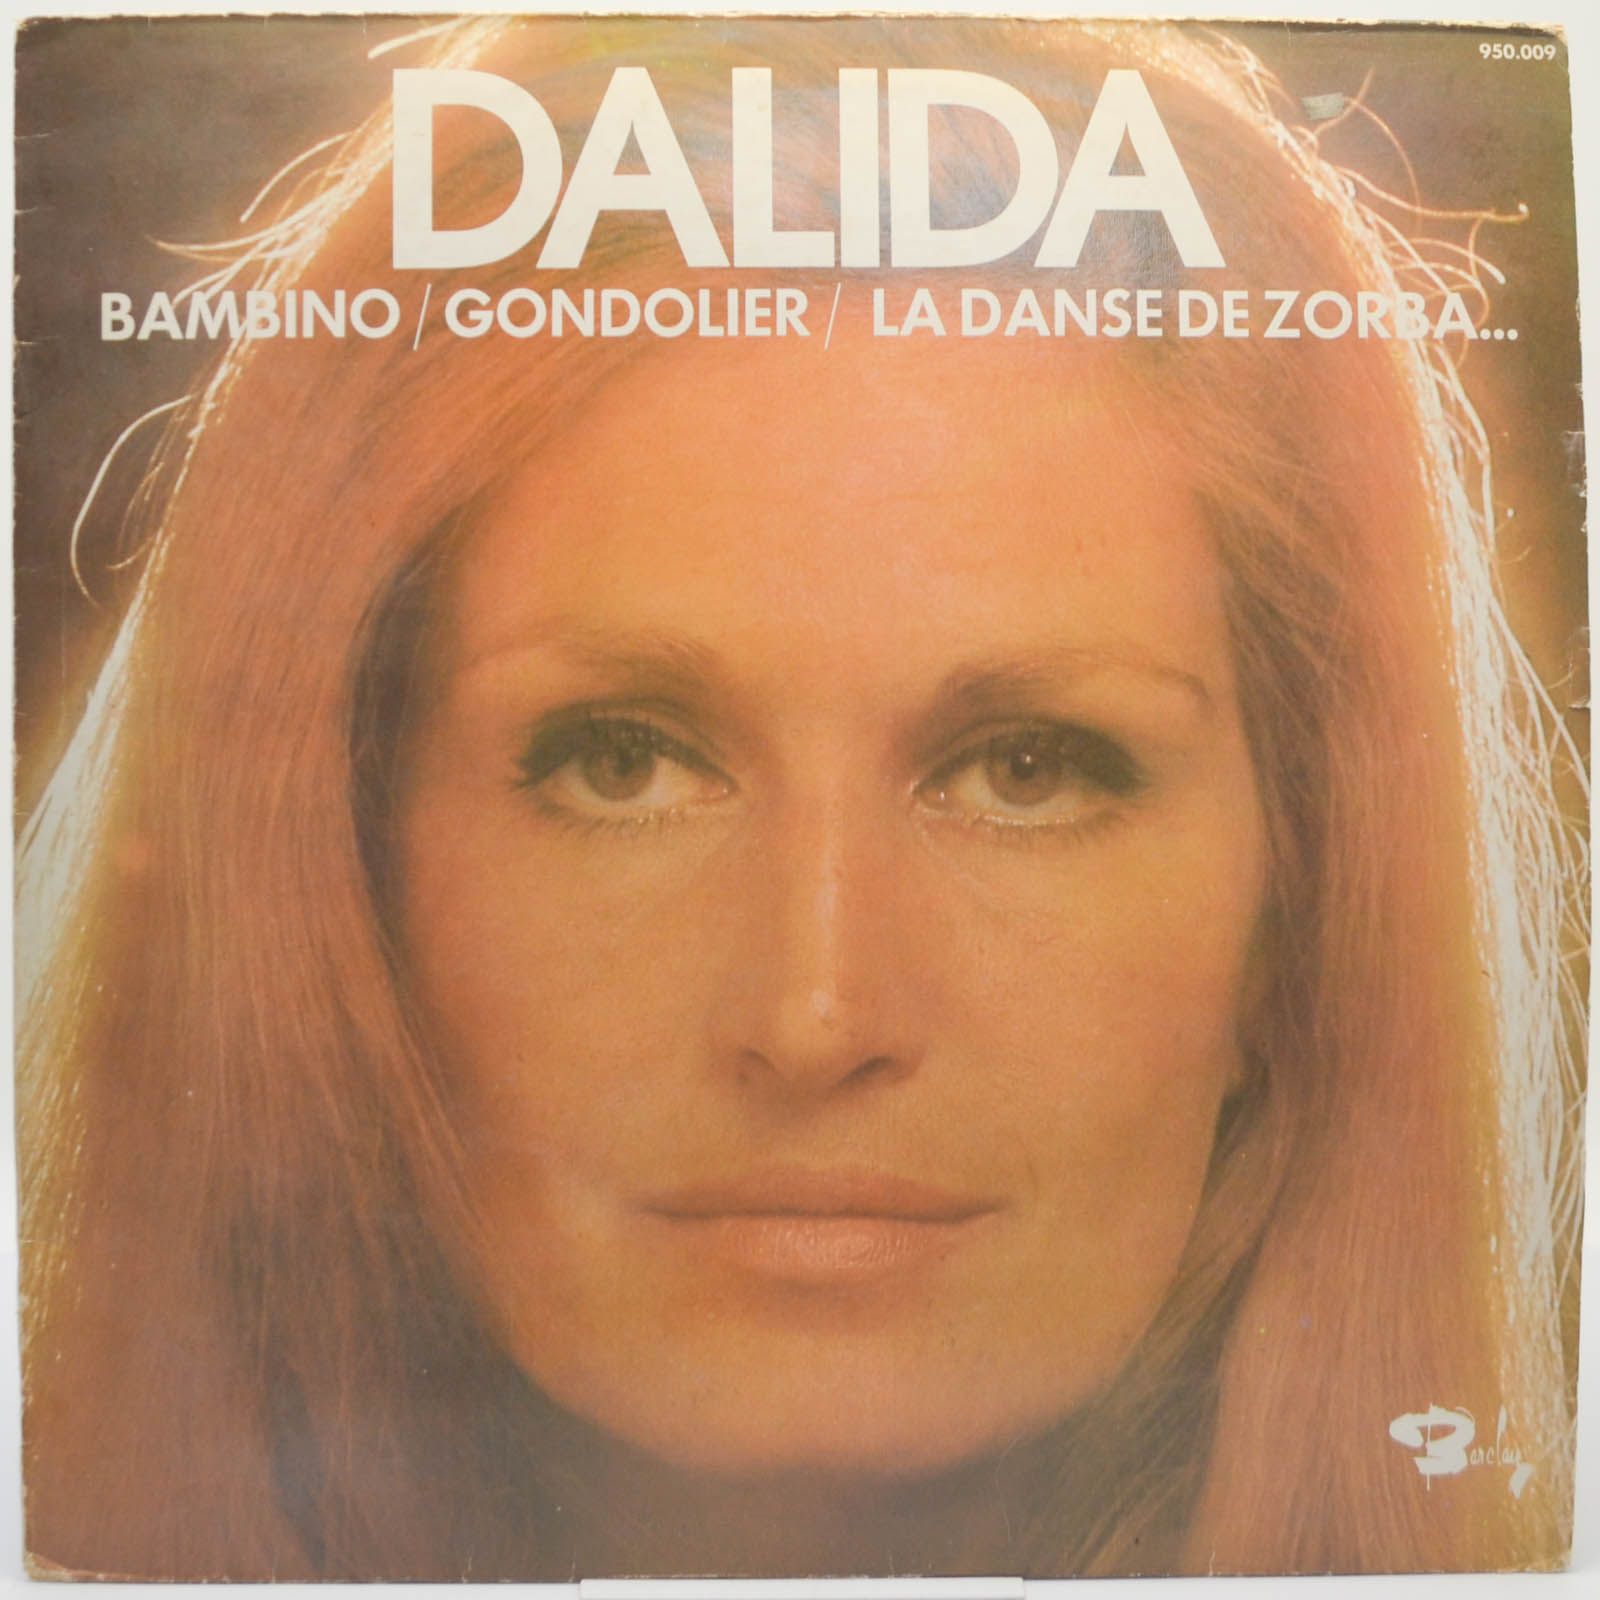 Dalida — Dalida (France), 1980